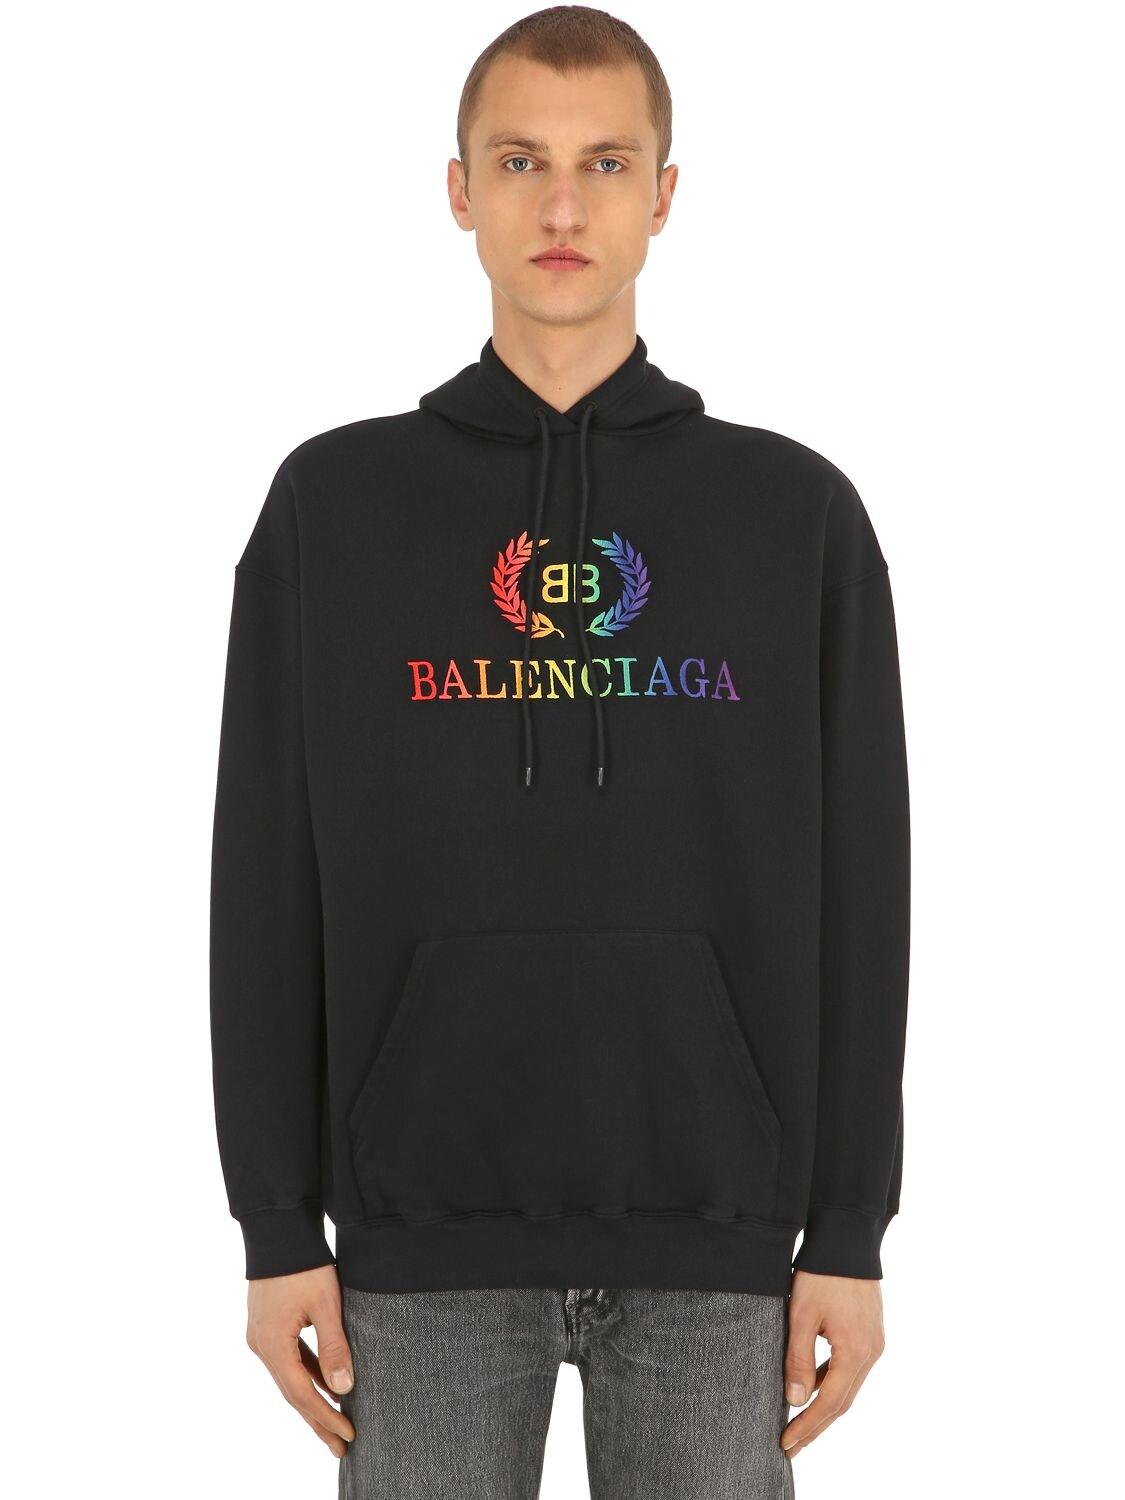 Balenciaga Rainbow Logo Printed Sweatshirt Hoodie in Black for Men - Lyst